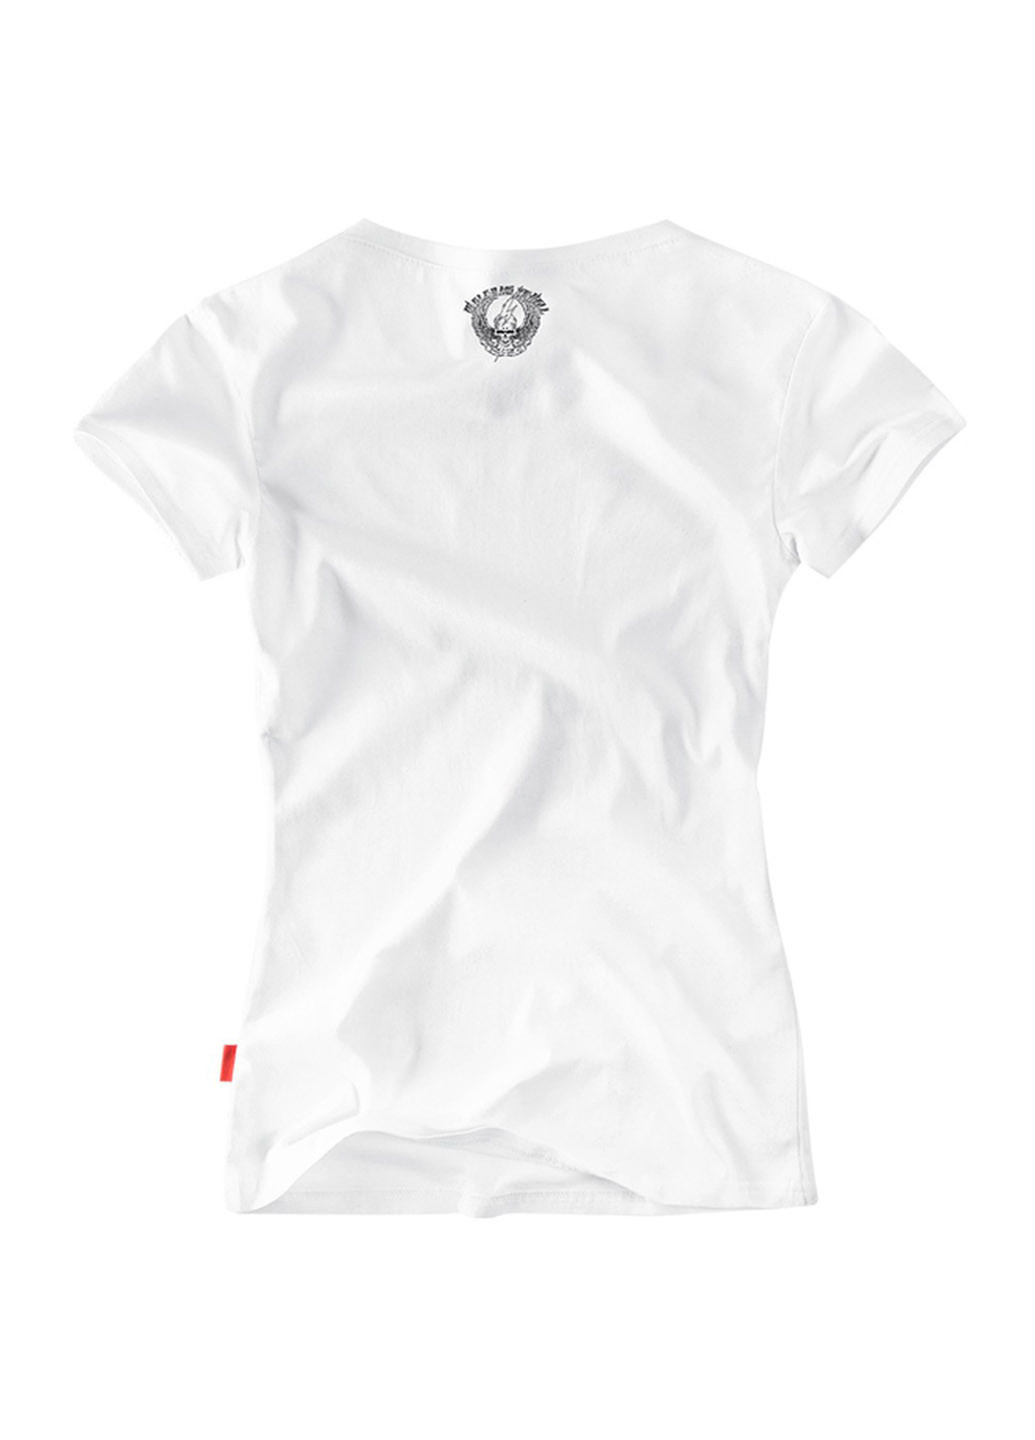 Белая летняя футболка dobermans welcome to hell tsd155wt Dobermans Aggressive